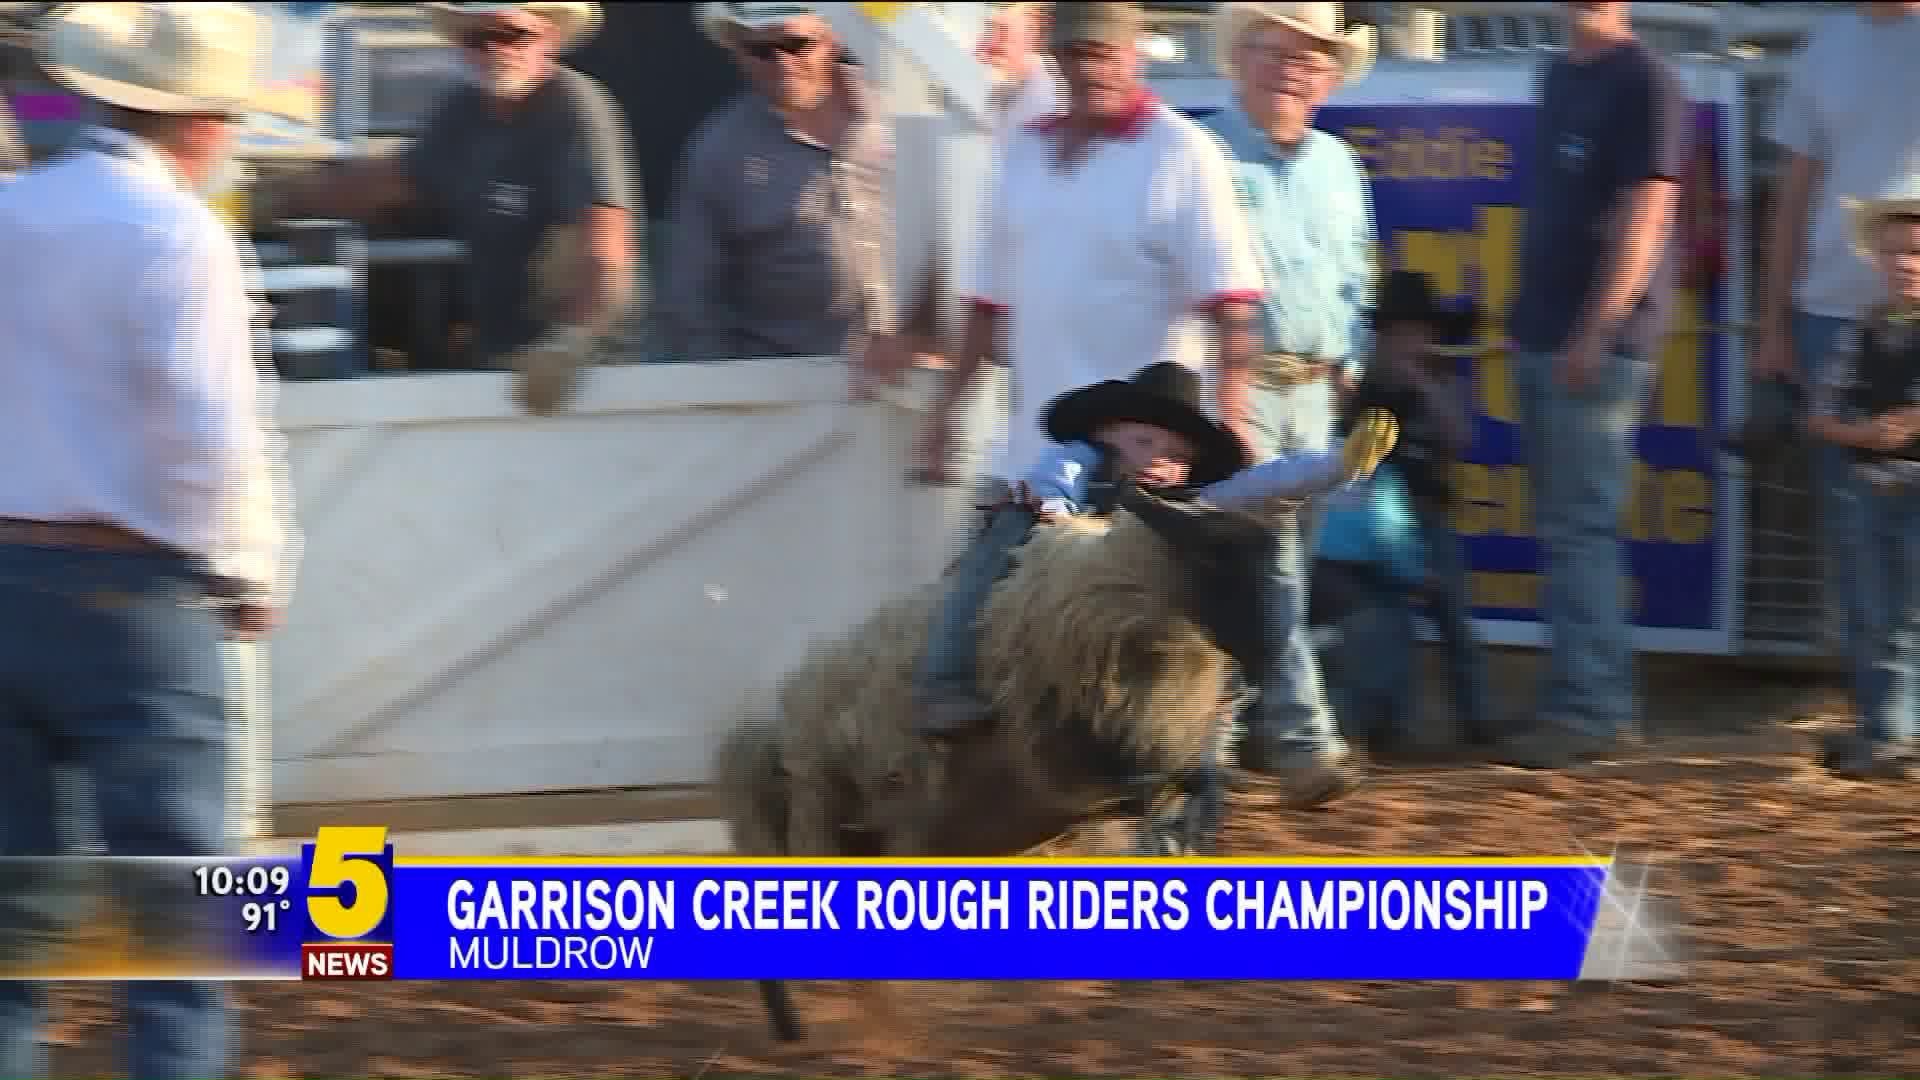 Garrison Creek Rough Riders Championship